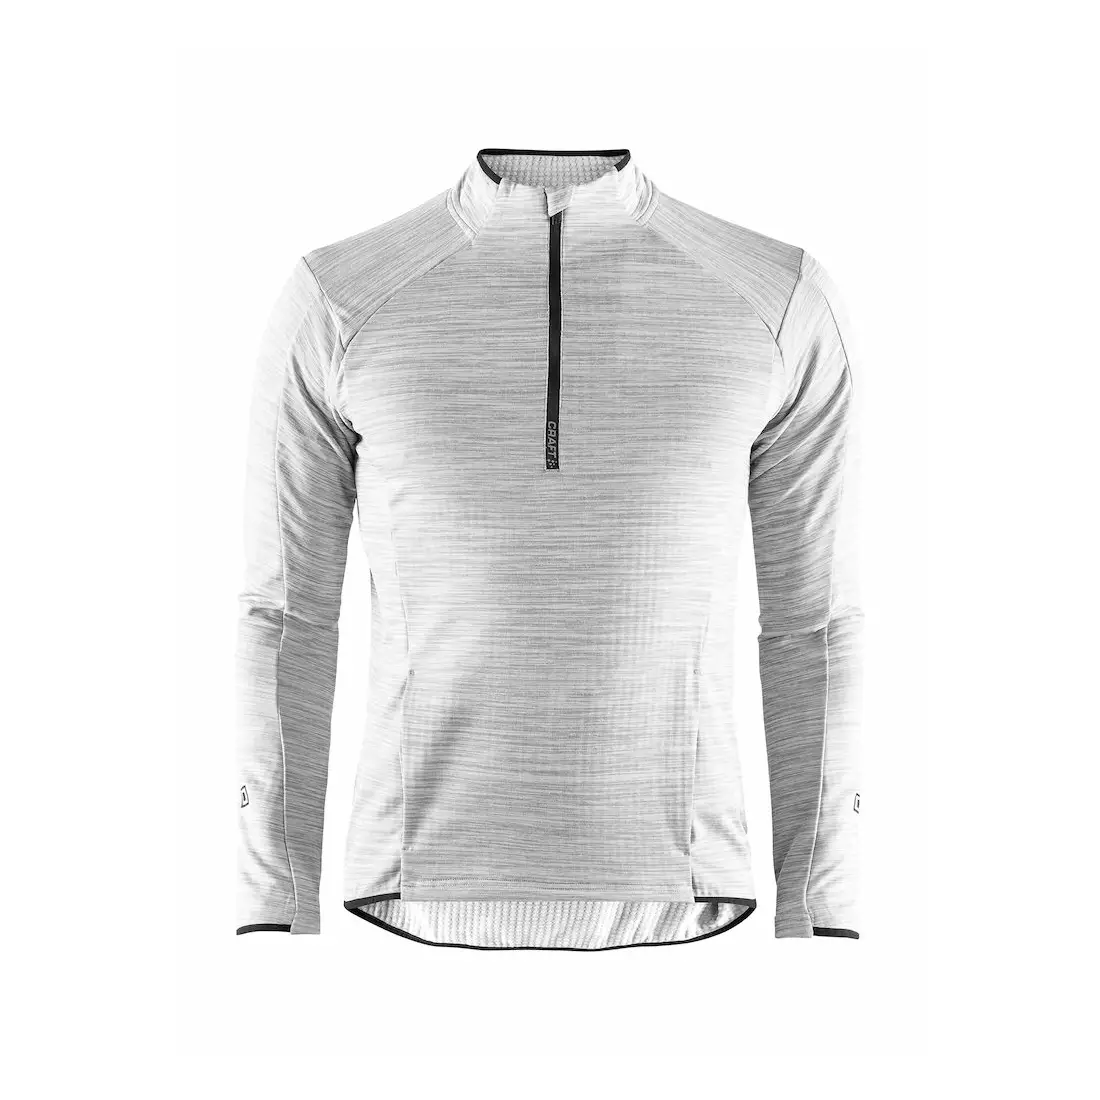 CRAFT GRID men's sports sweatshirt, gray melange 1906648-950000